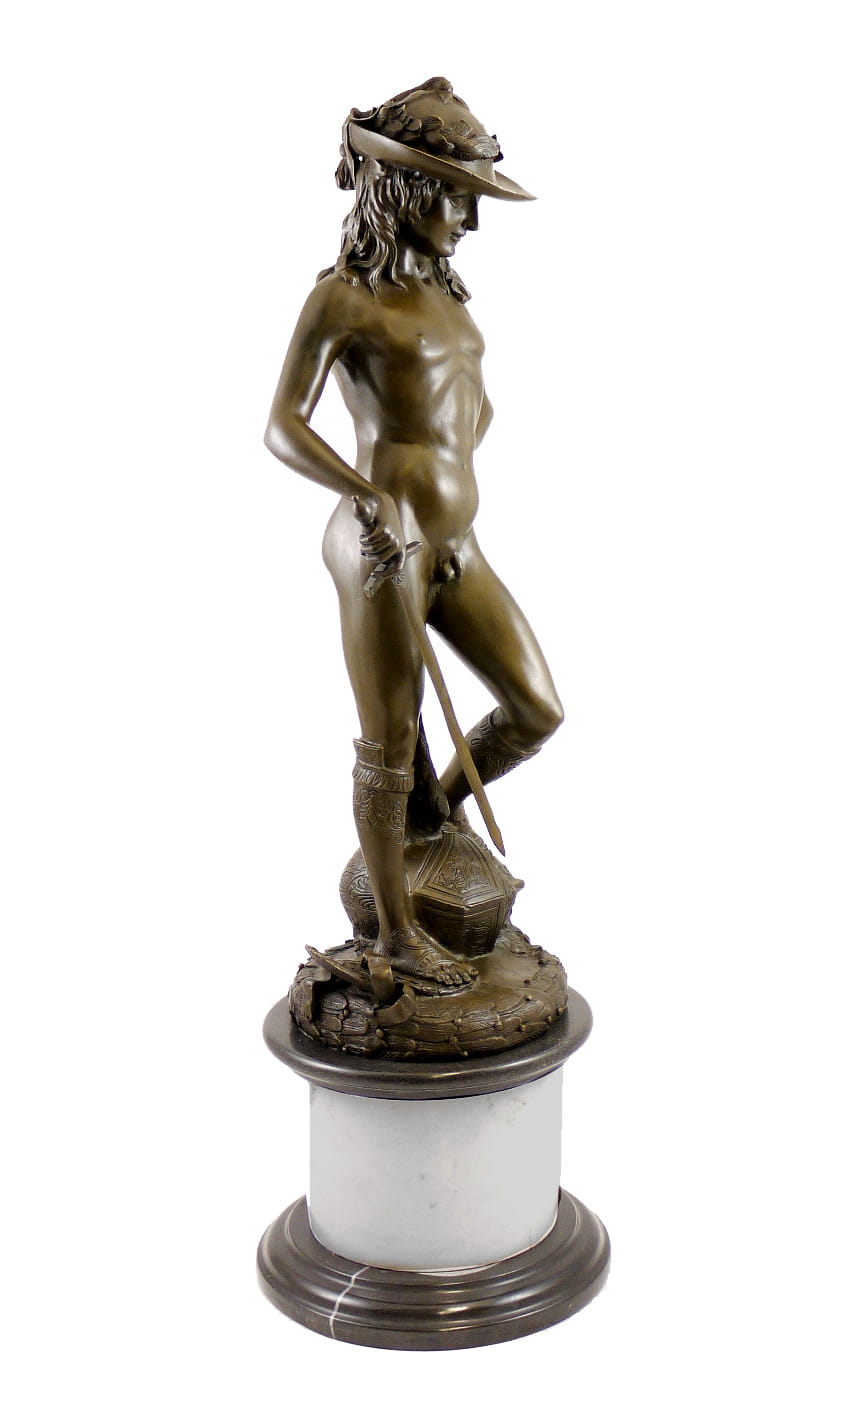 Bronze David by Donatello. 64x22x20cm - bronze sculptures.